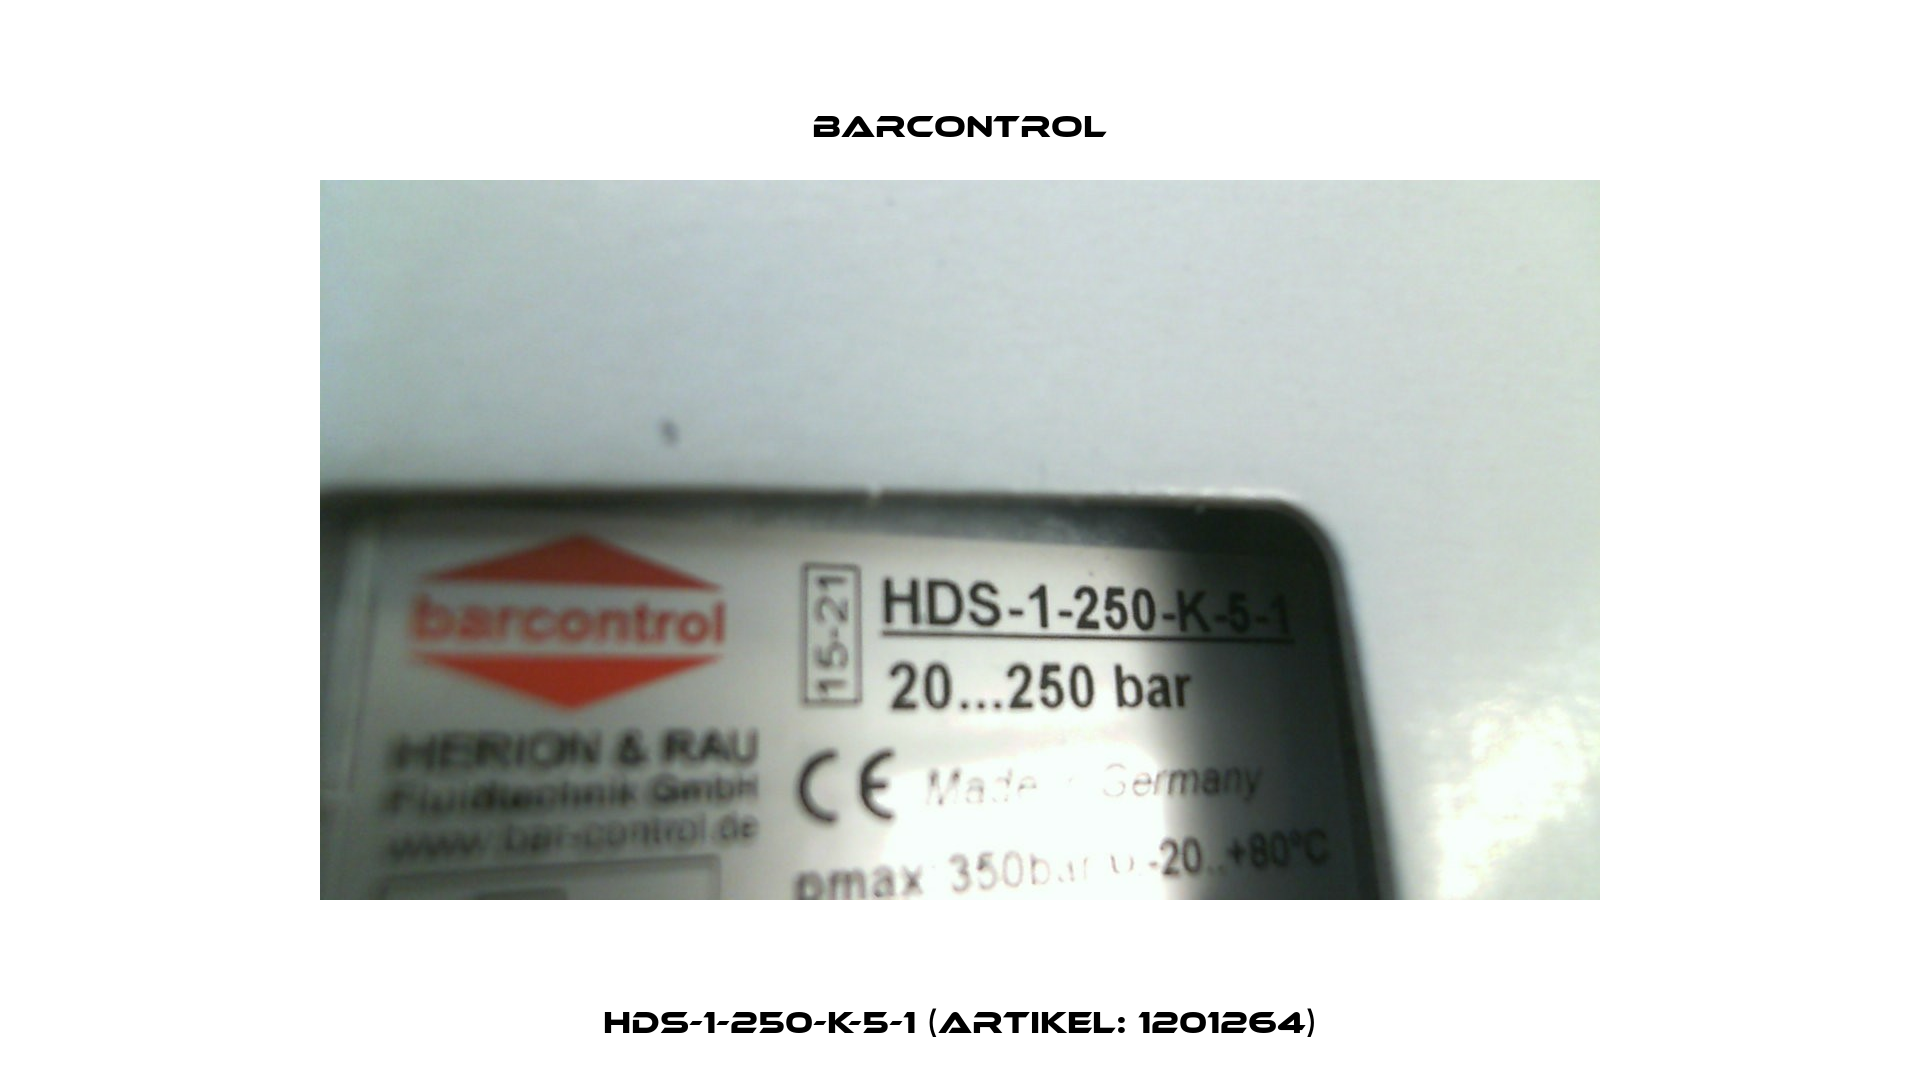 HDS-1-250-K-5-1 (Artikel: 1201264) Barcontrol